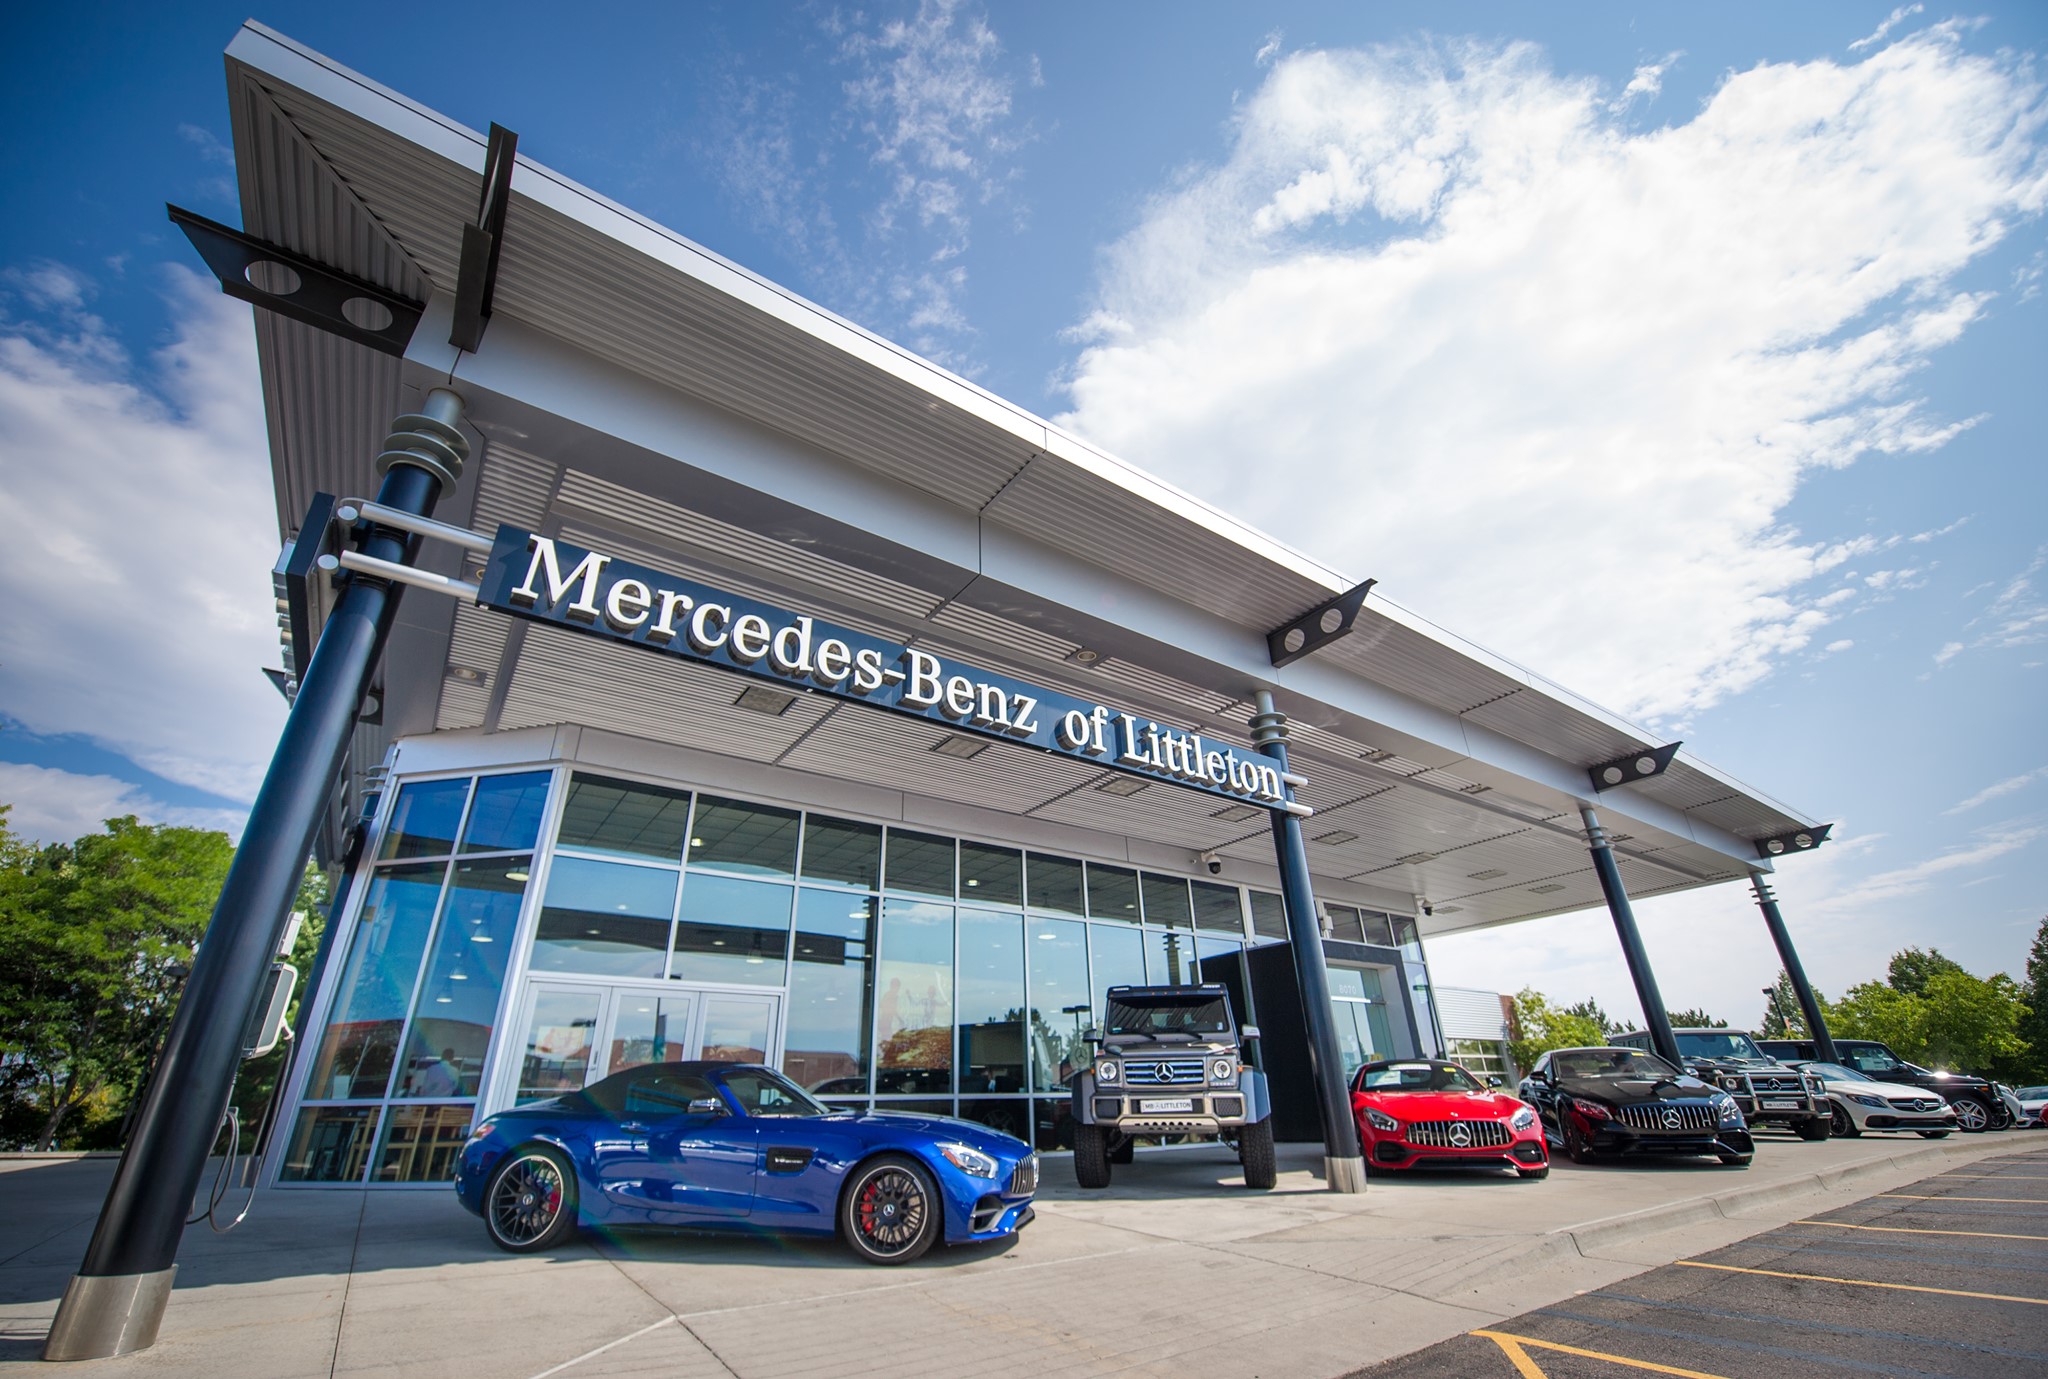 Find your dream car at Mercedes-Benz of Littleton